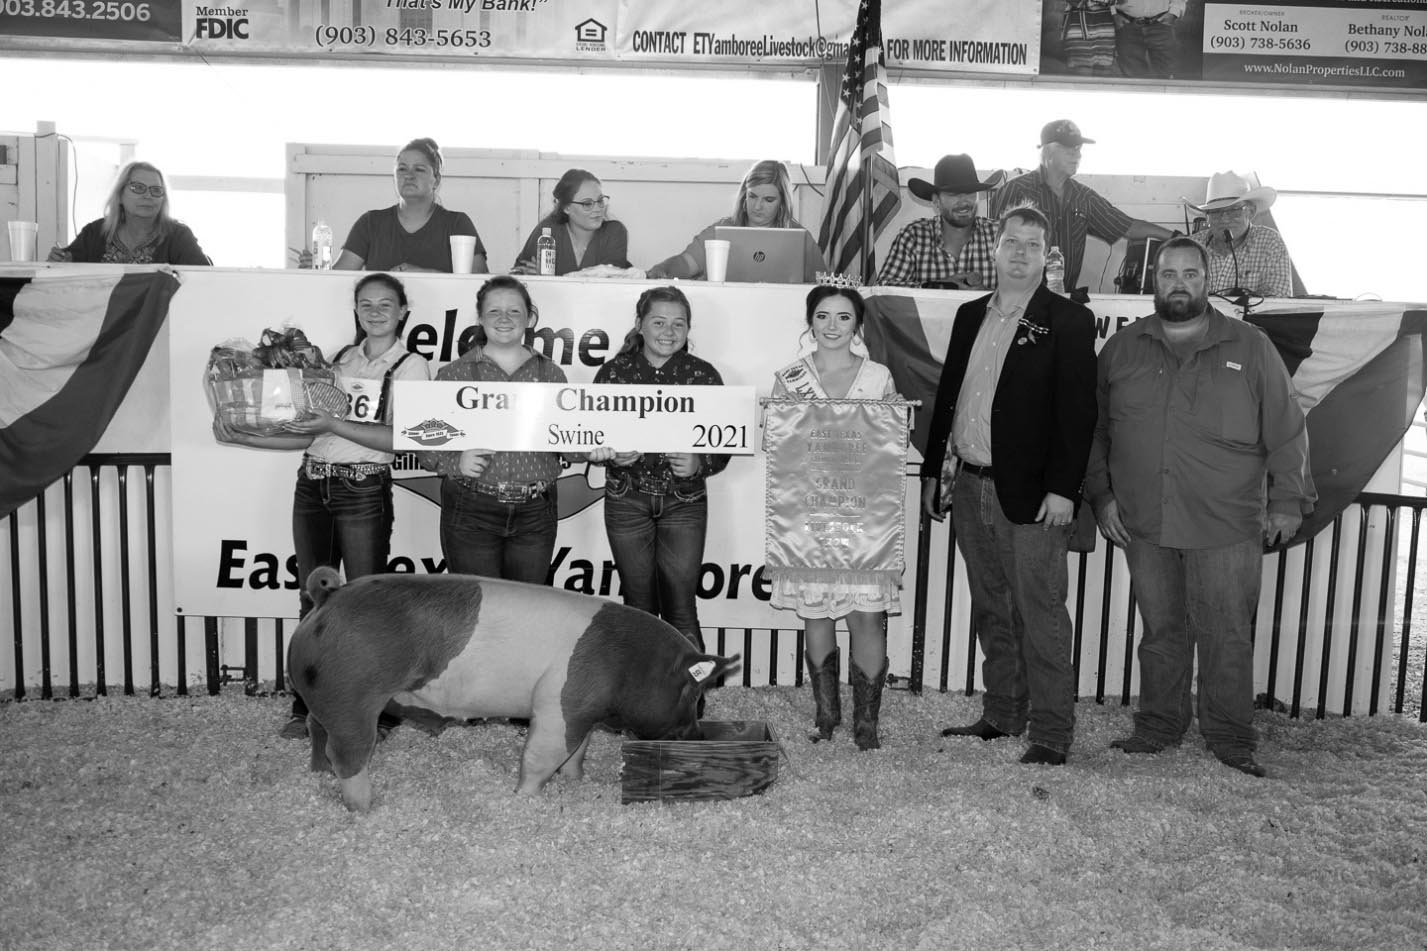 East TexasYamboree Livestock Show Schedule - East Texas Yamboree